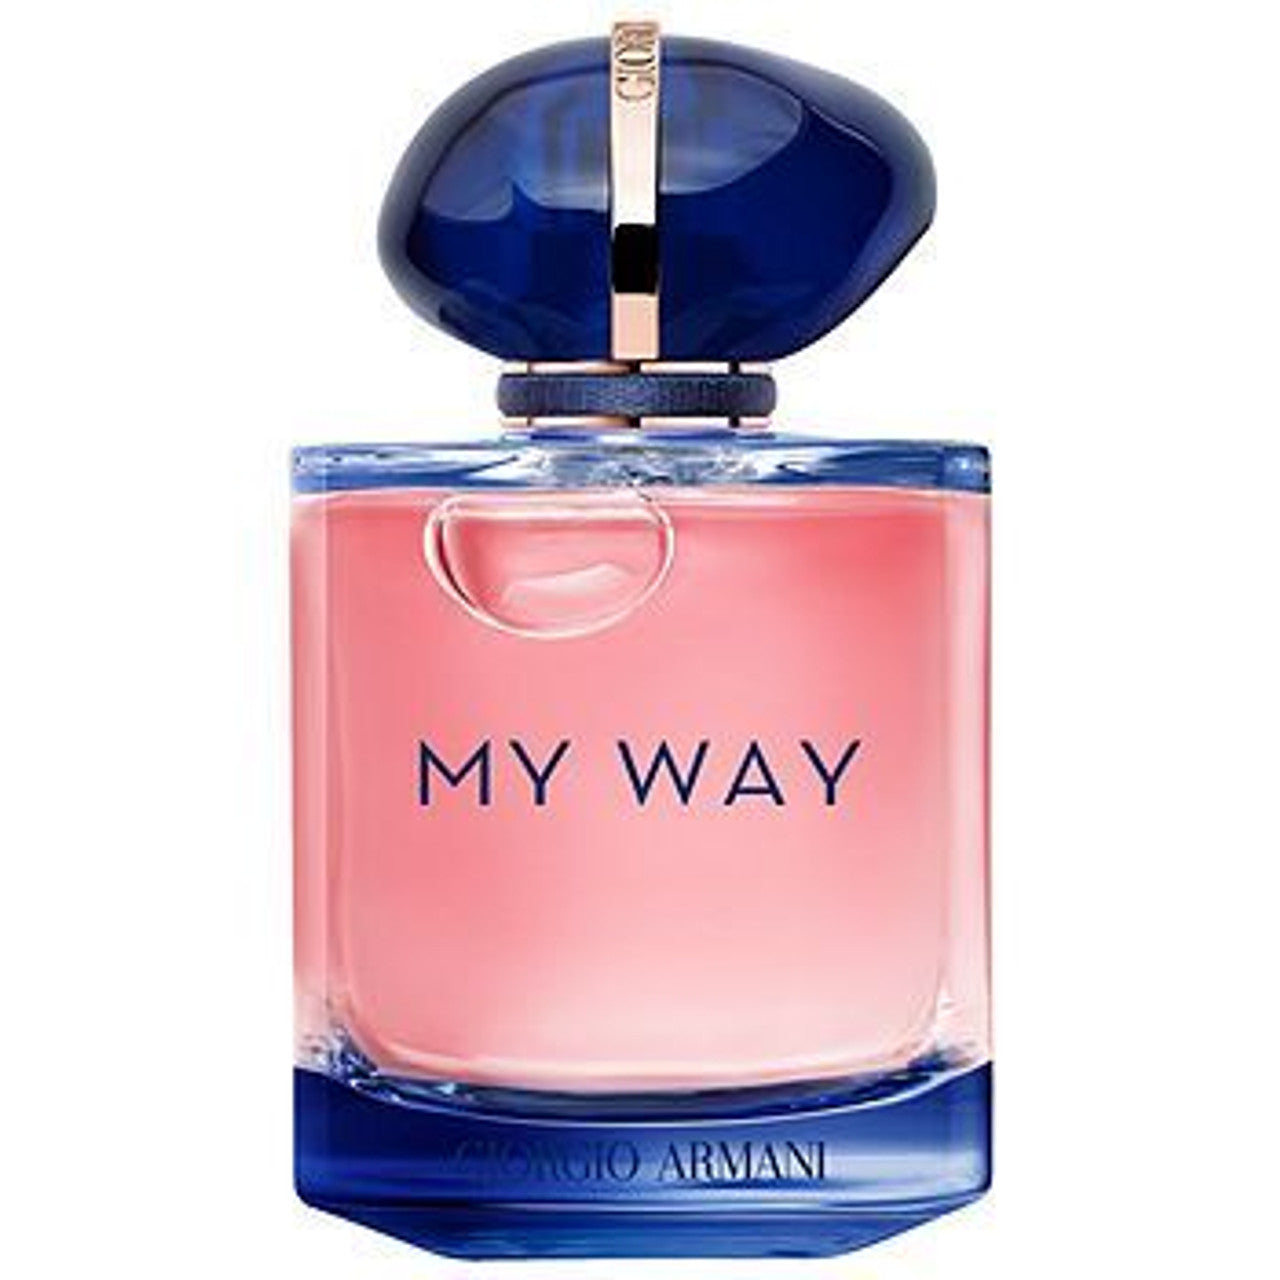 My Way Intense By Giorgio Armani For Women 3.0 oz Eau De Parfum Spray